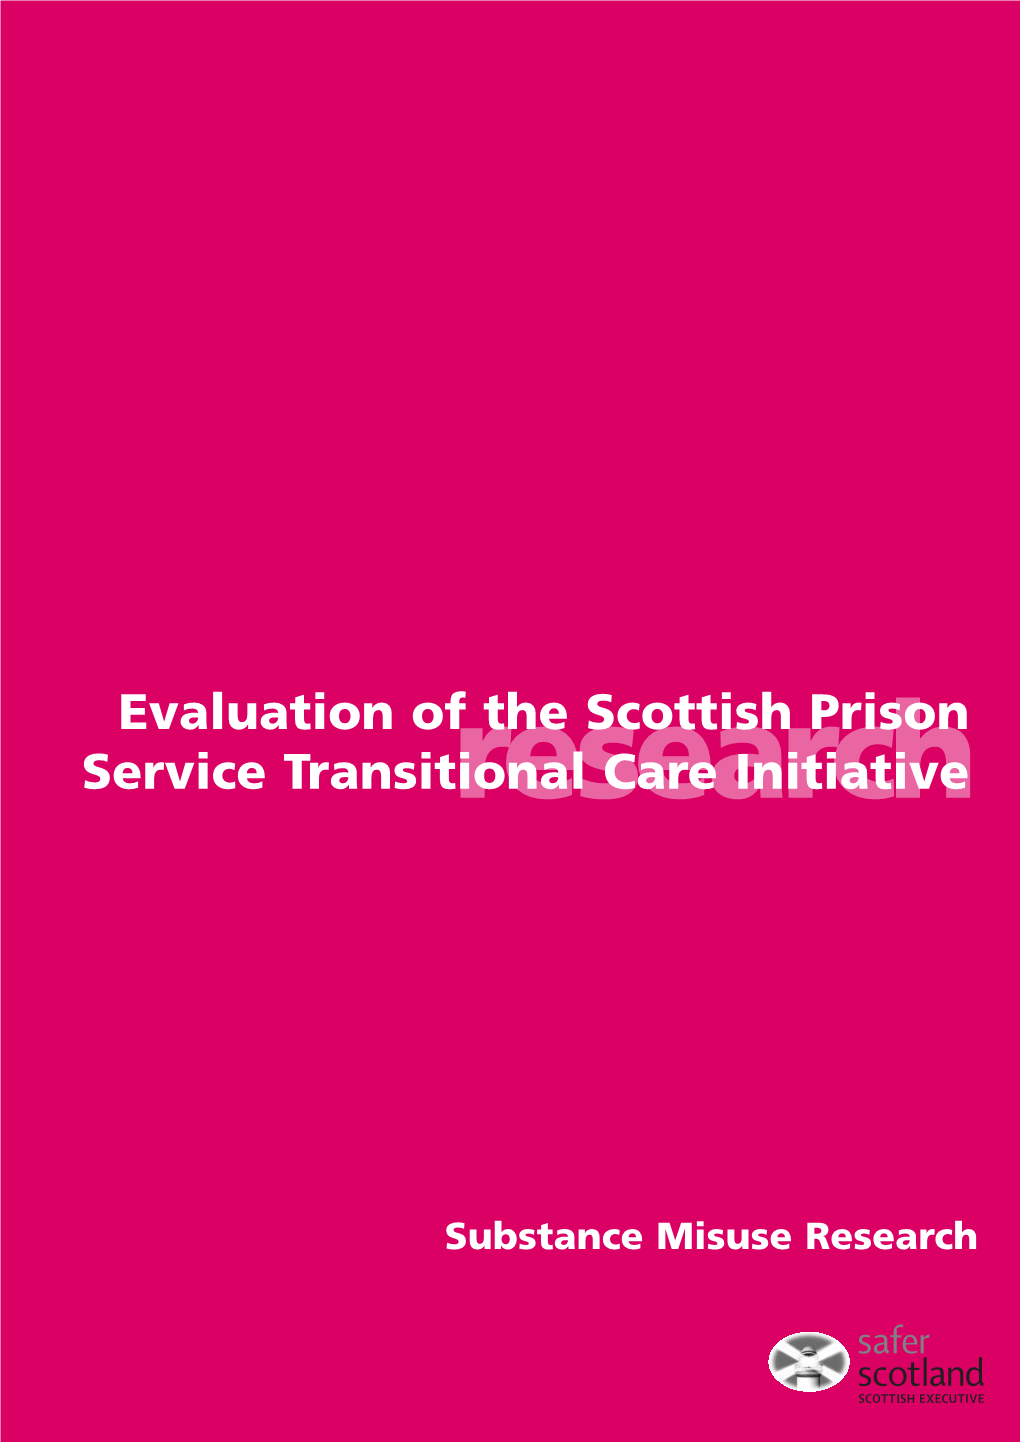 PDF (Evaluation of the Scottish Prison Service Transitional Care Initiative)